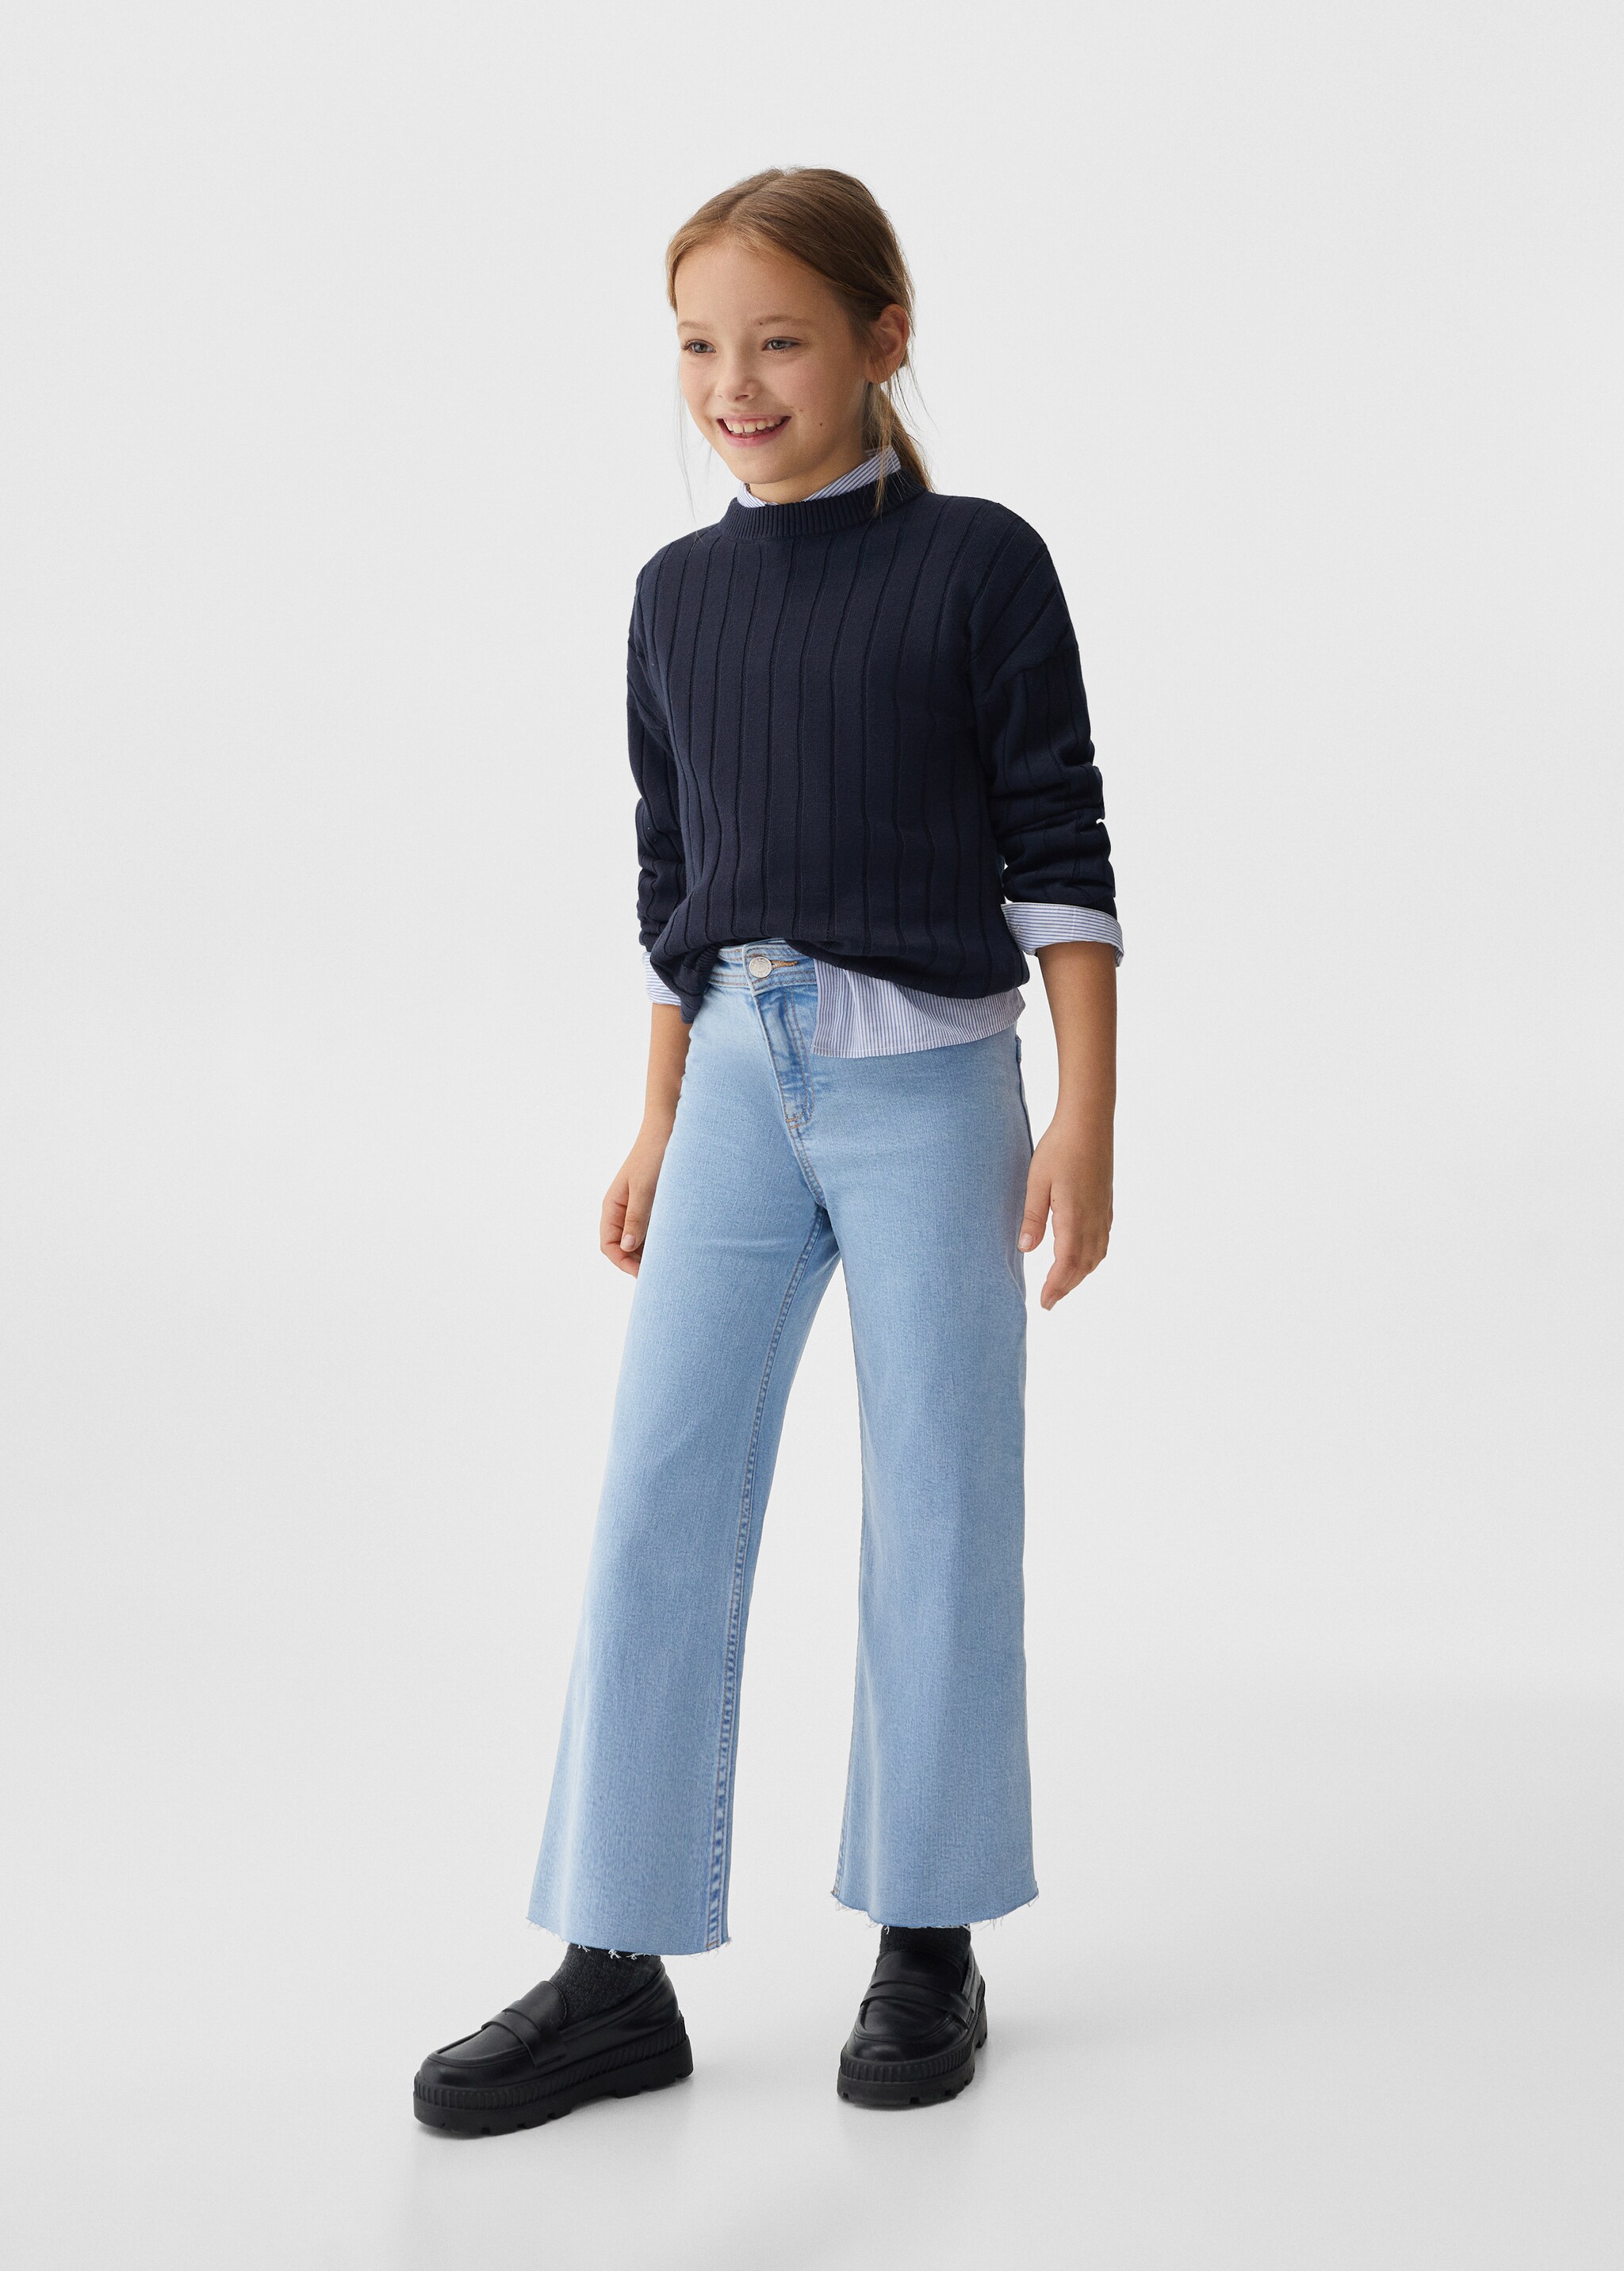 Jeans culotte de cintura alta - Plano geral